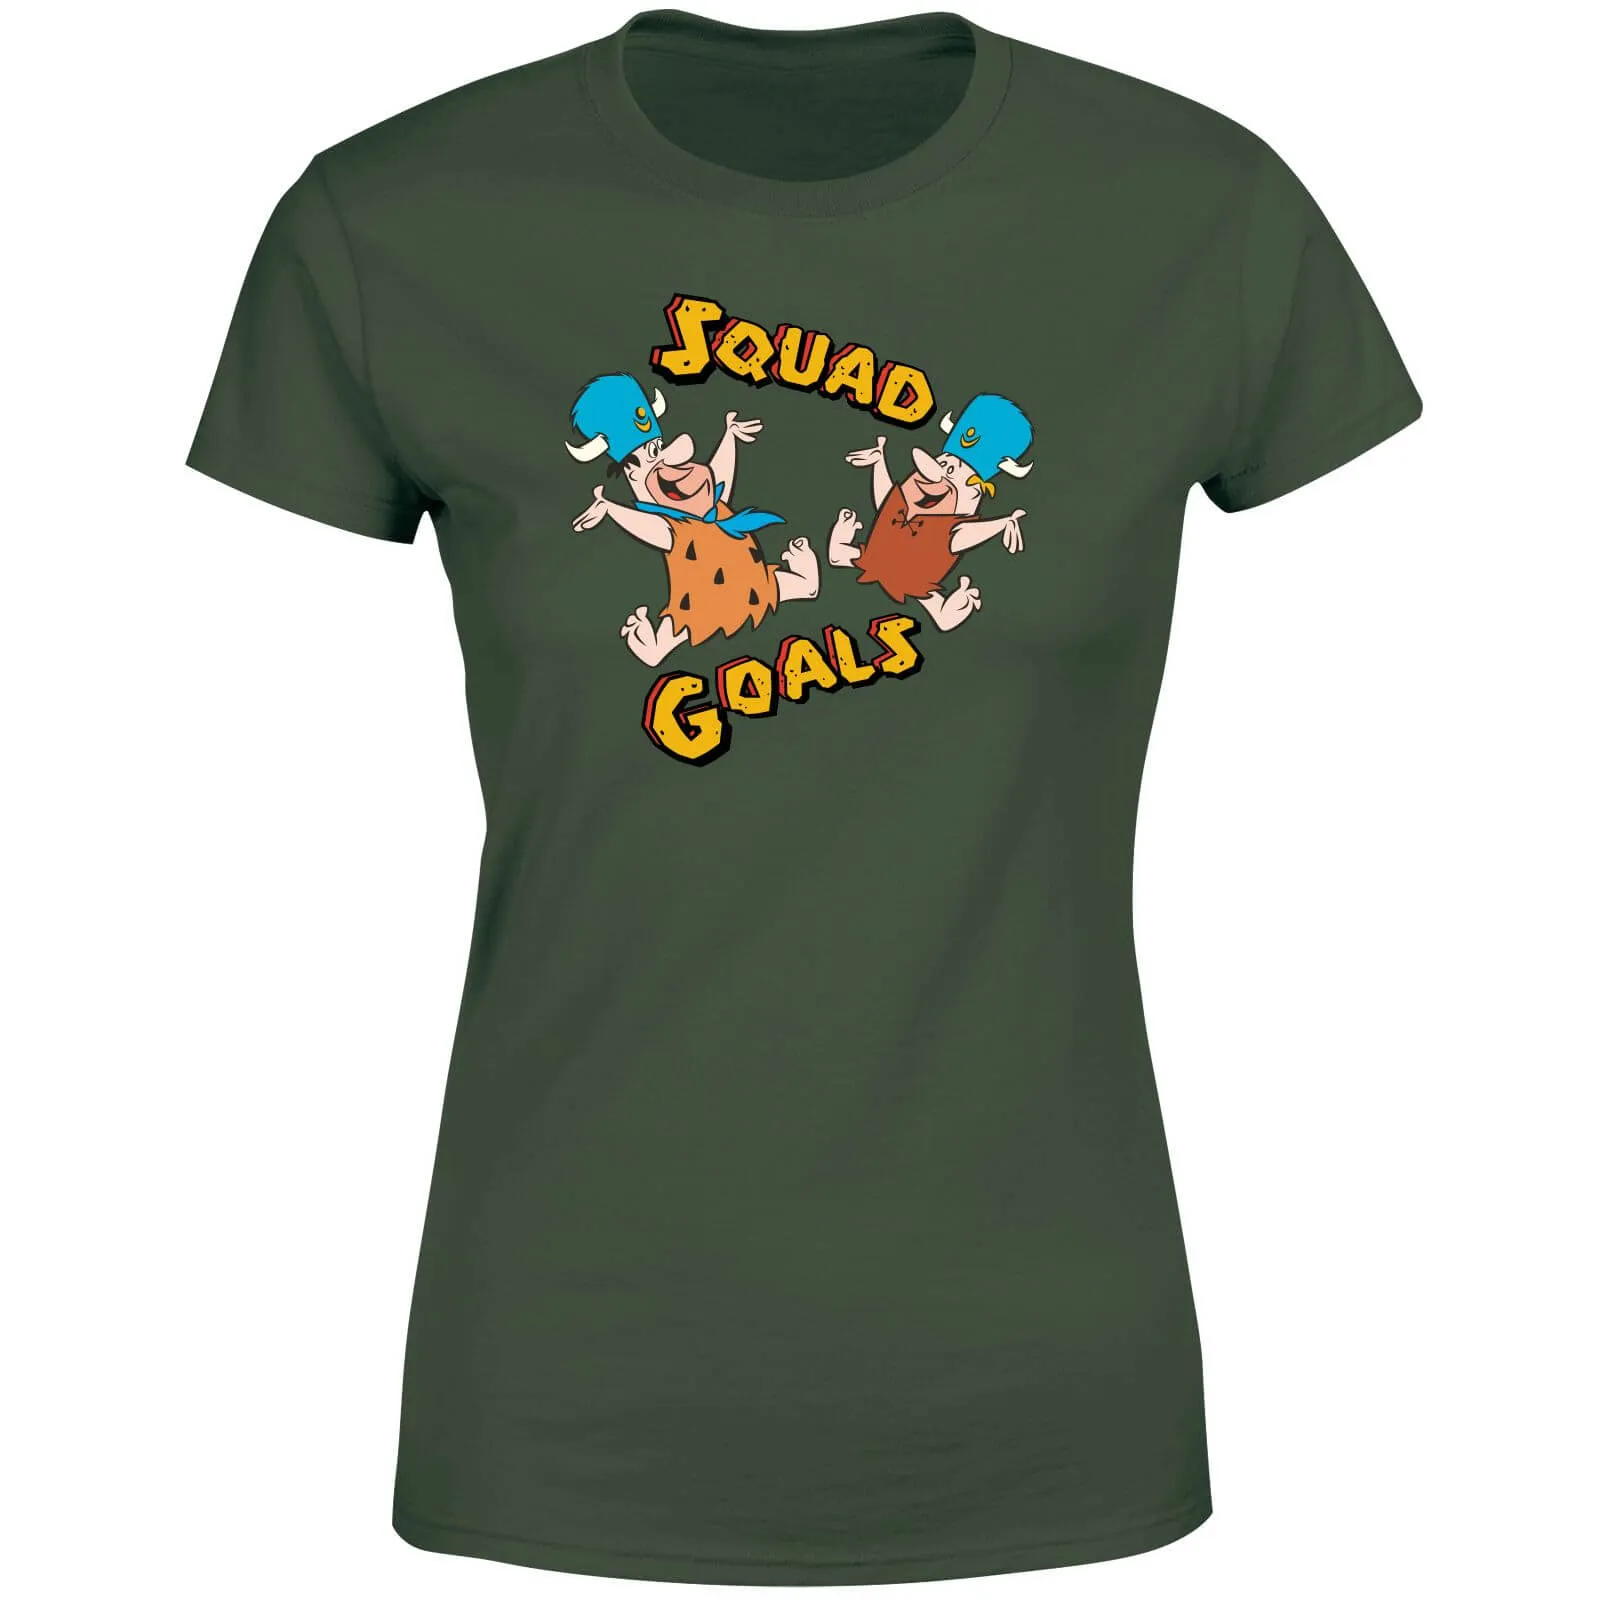 The Flintstones Squad Goals Women's T-Shirt - Forest Green - L - Forest Green